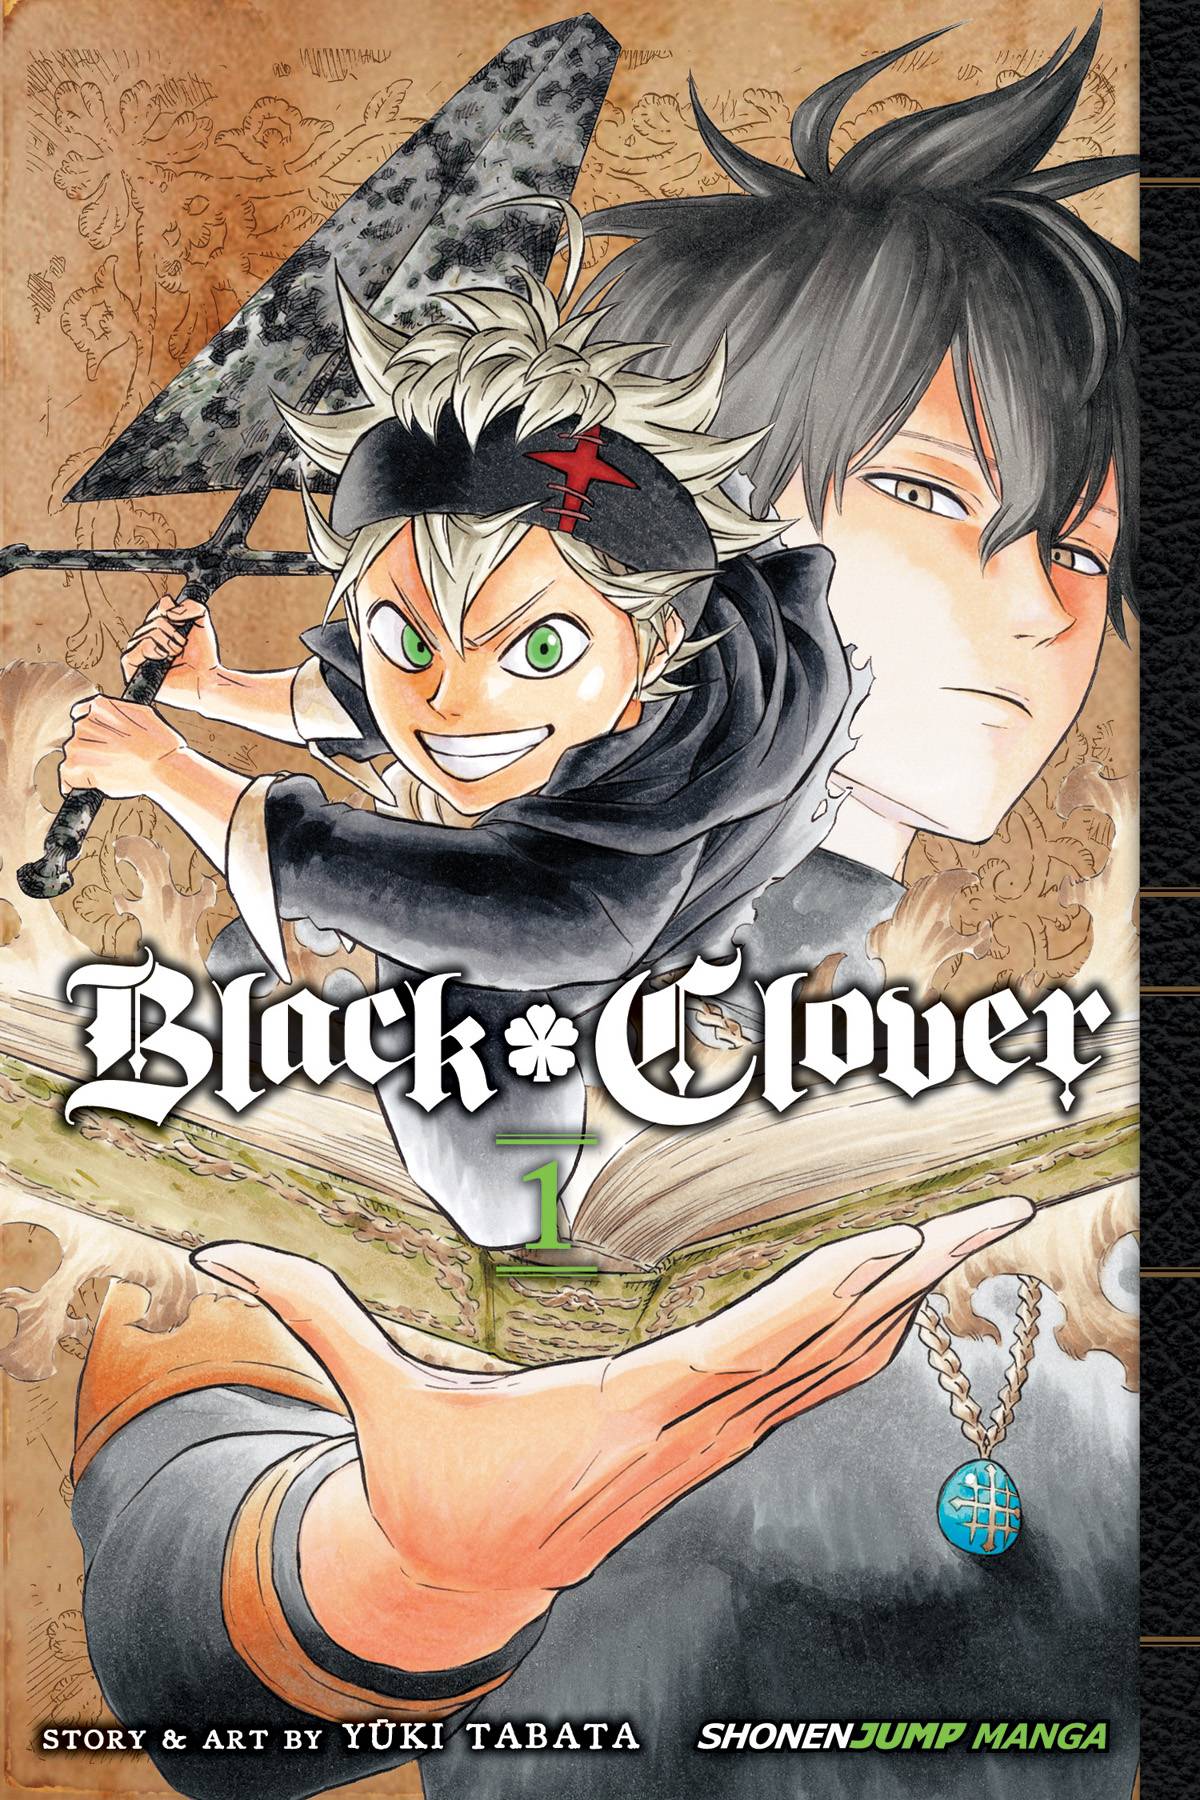 BLACK CLOVER GN VOL 01